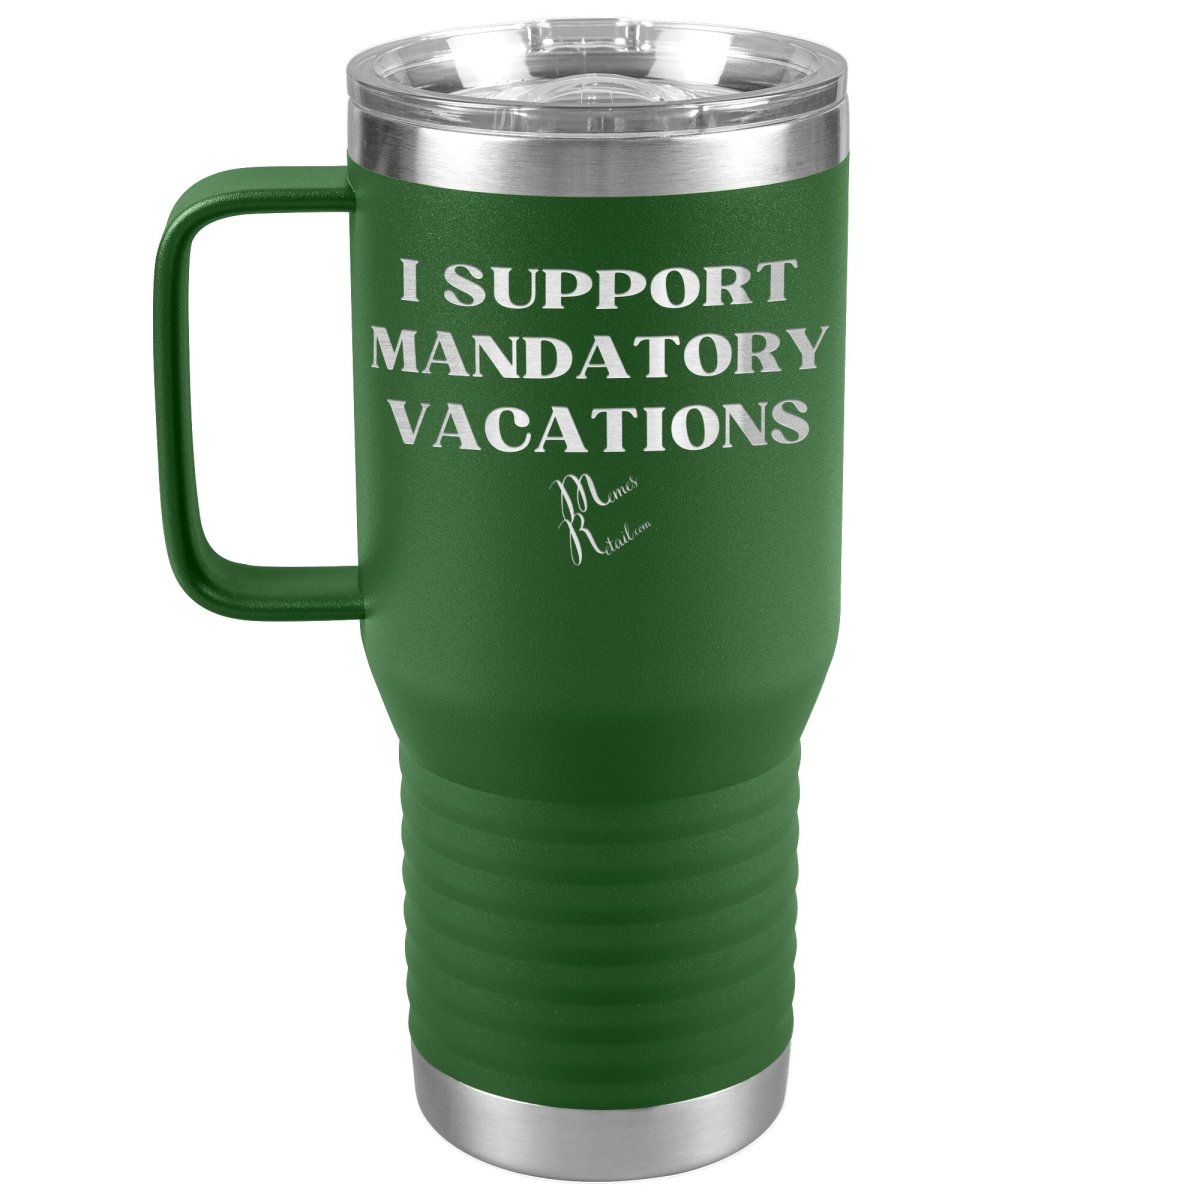 I support mandatory vacations Tumblers, 20oz Travel Tumbler / Green - MemesRetail.com